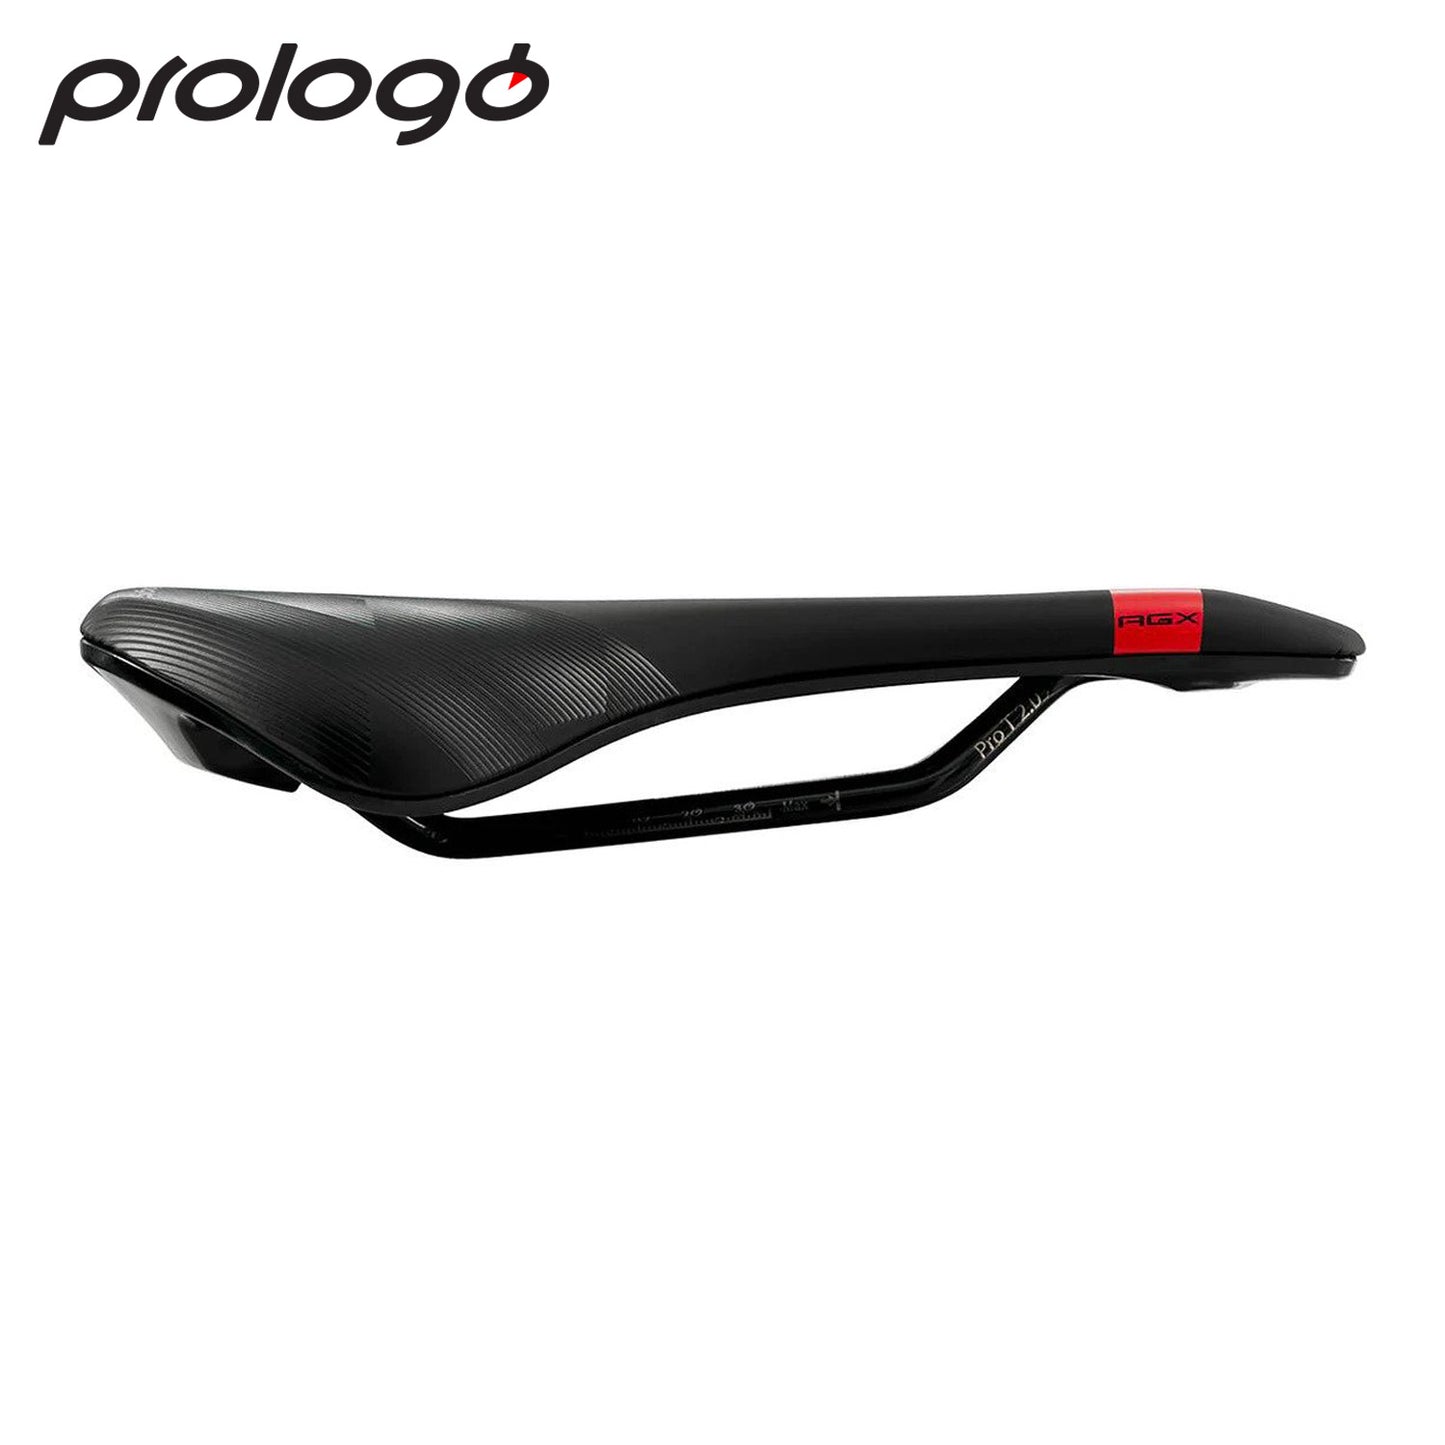 Prologo Akero AGX Bicycle Saddle - Black